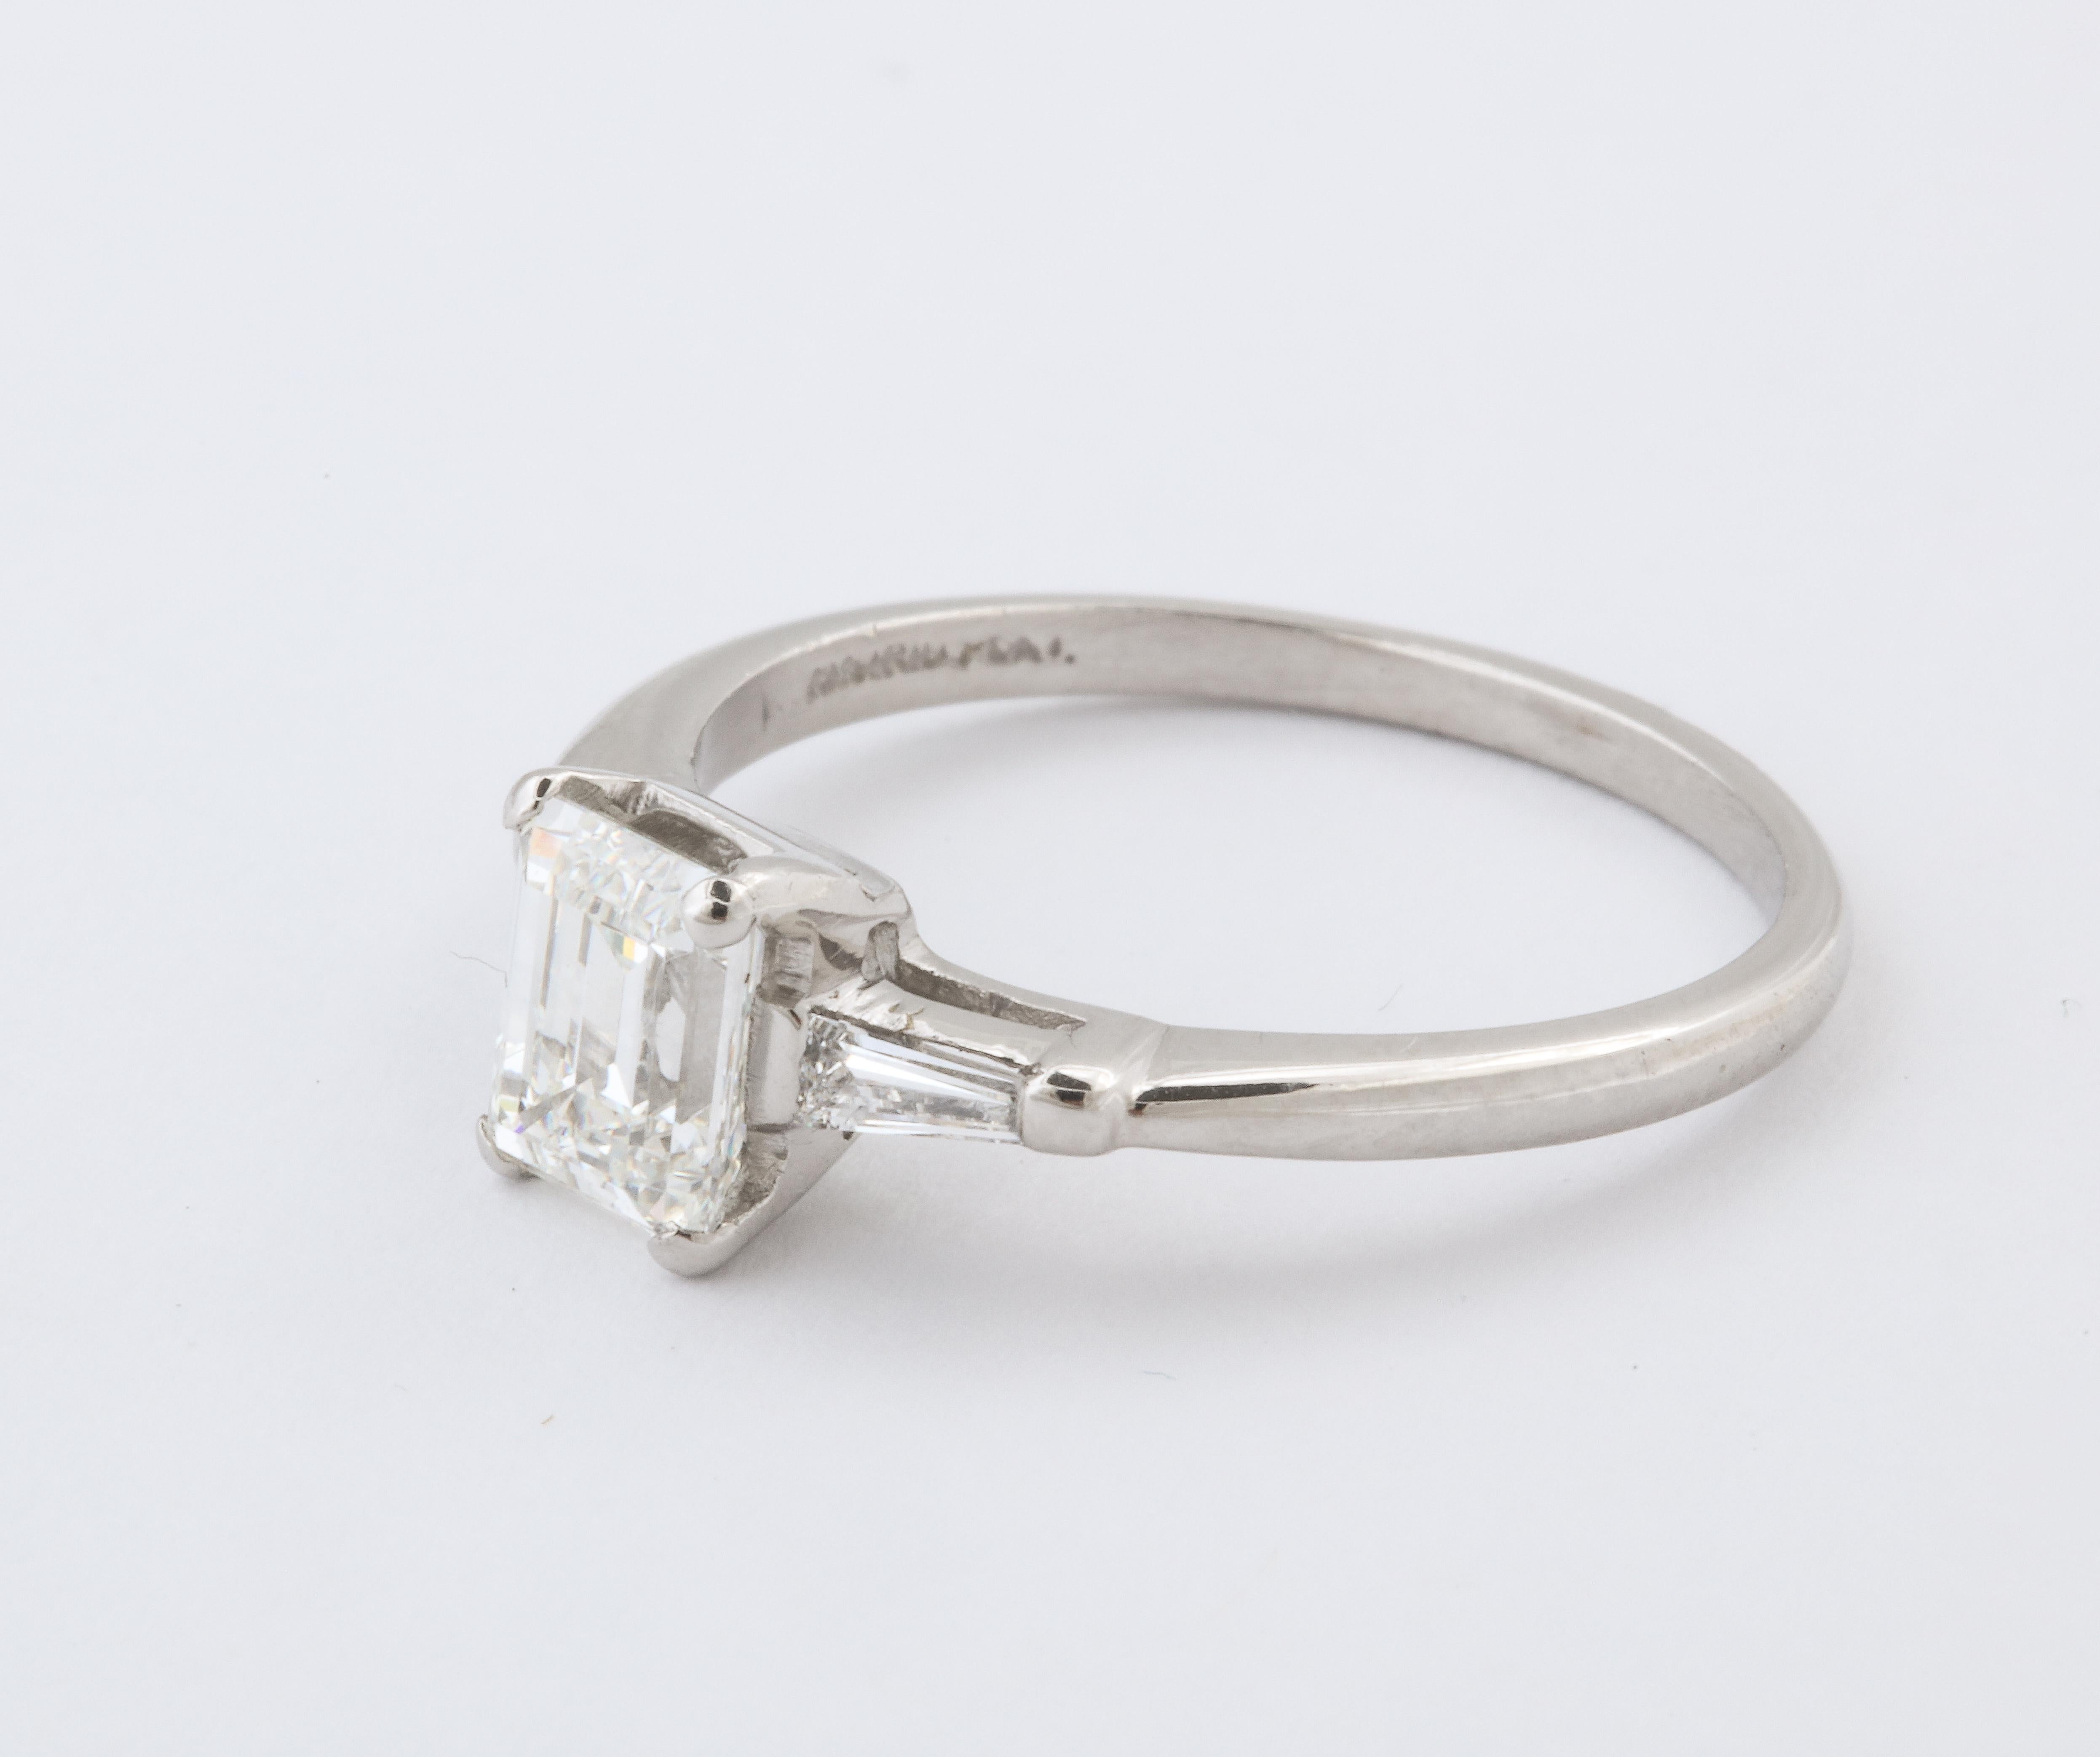 Art Deco Emerald Cut 1.07carat Diamond Engagement Ring with Baguettes GIA cert For Sale 3